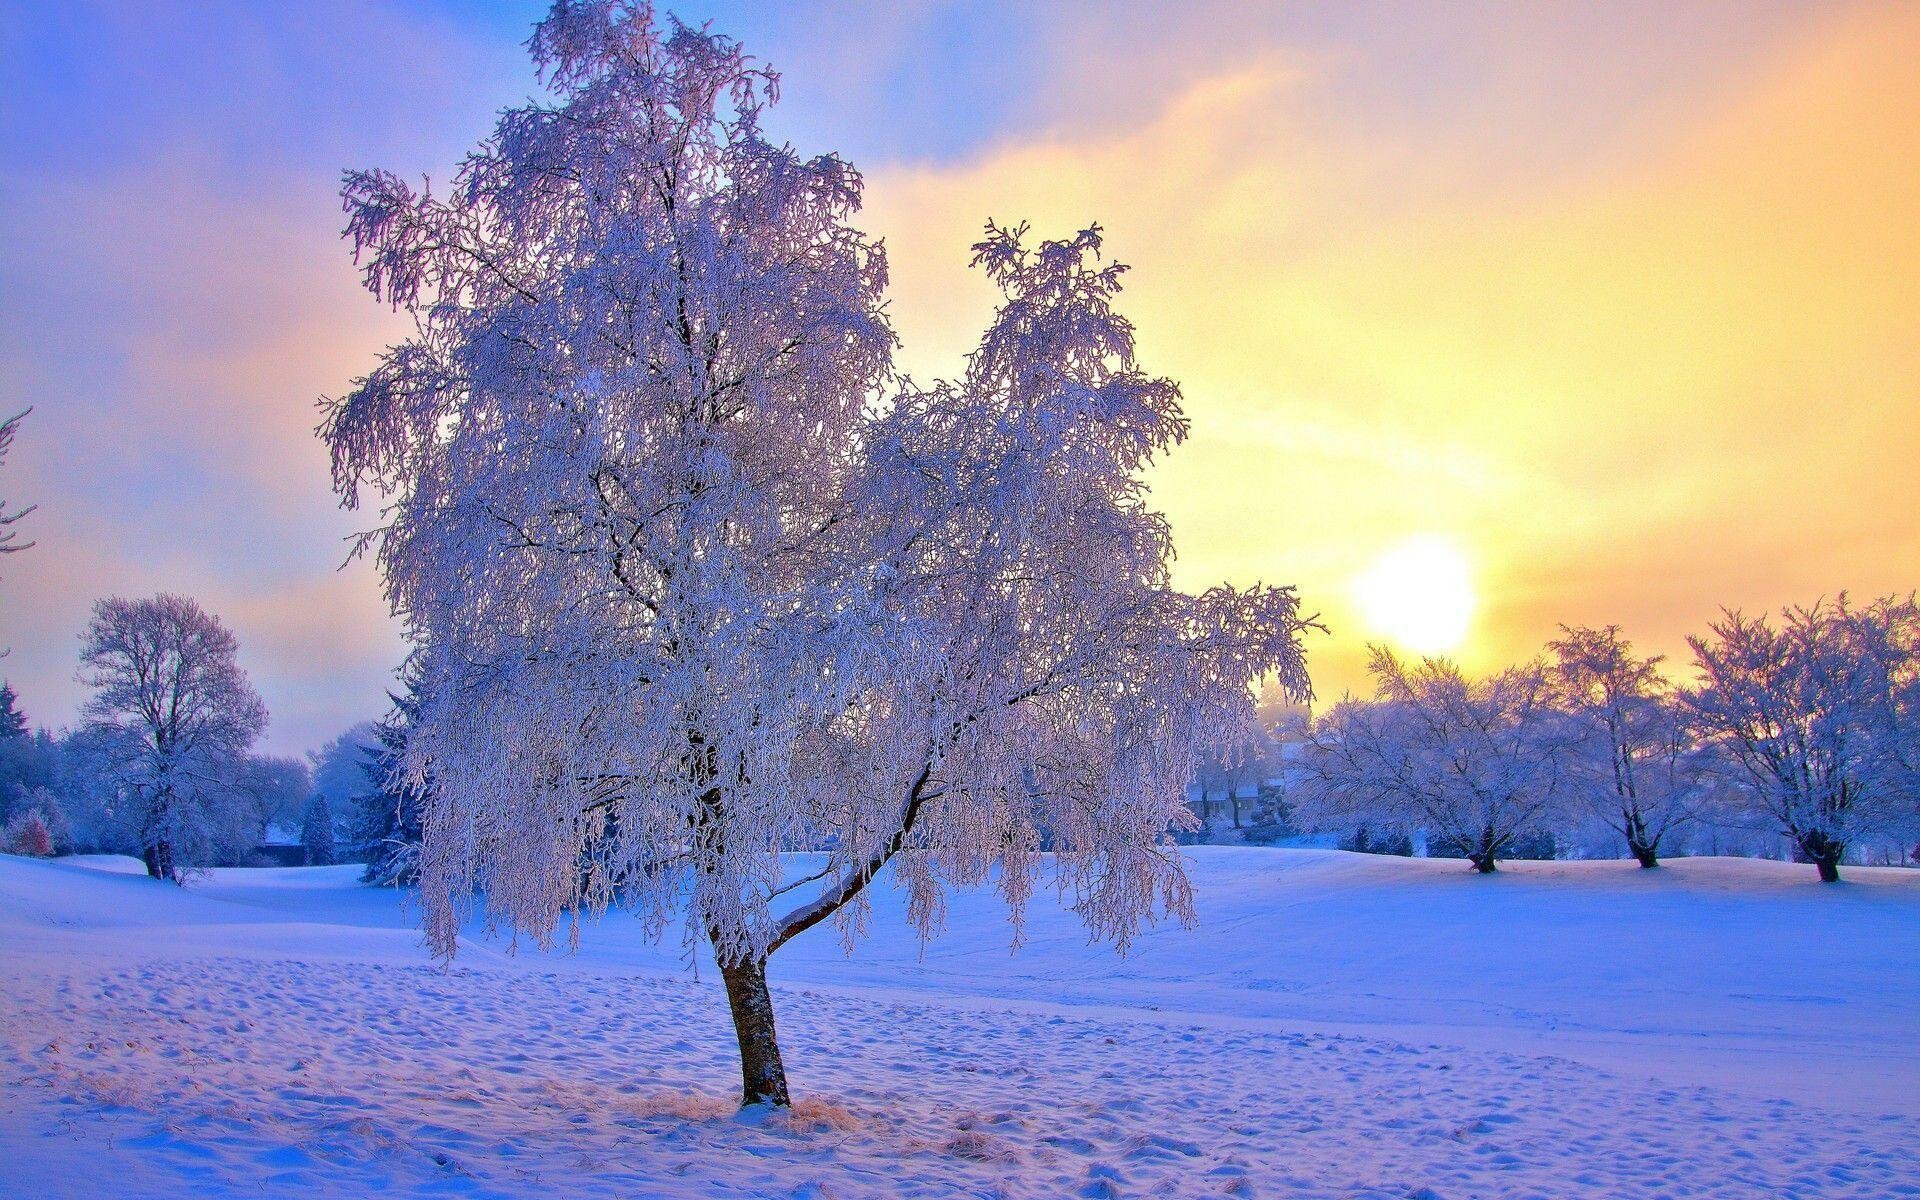 Winter: Hoar frost, Deposit of ice crystals on trees. 1920x1200 HD Wallpaper.